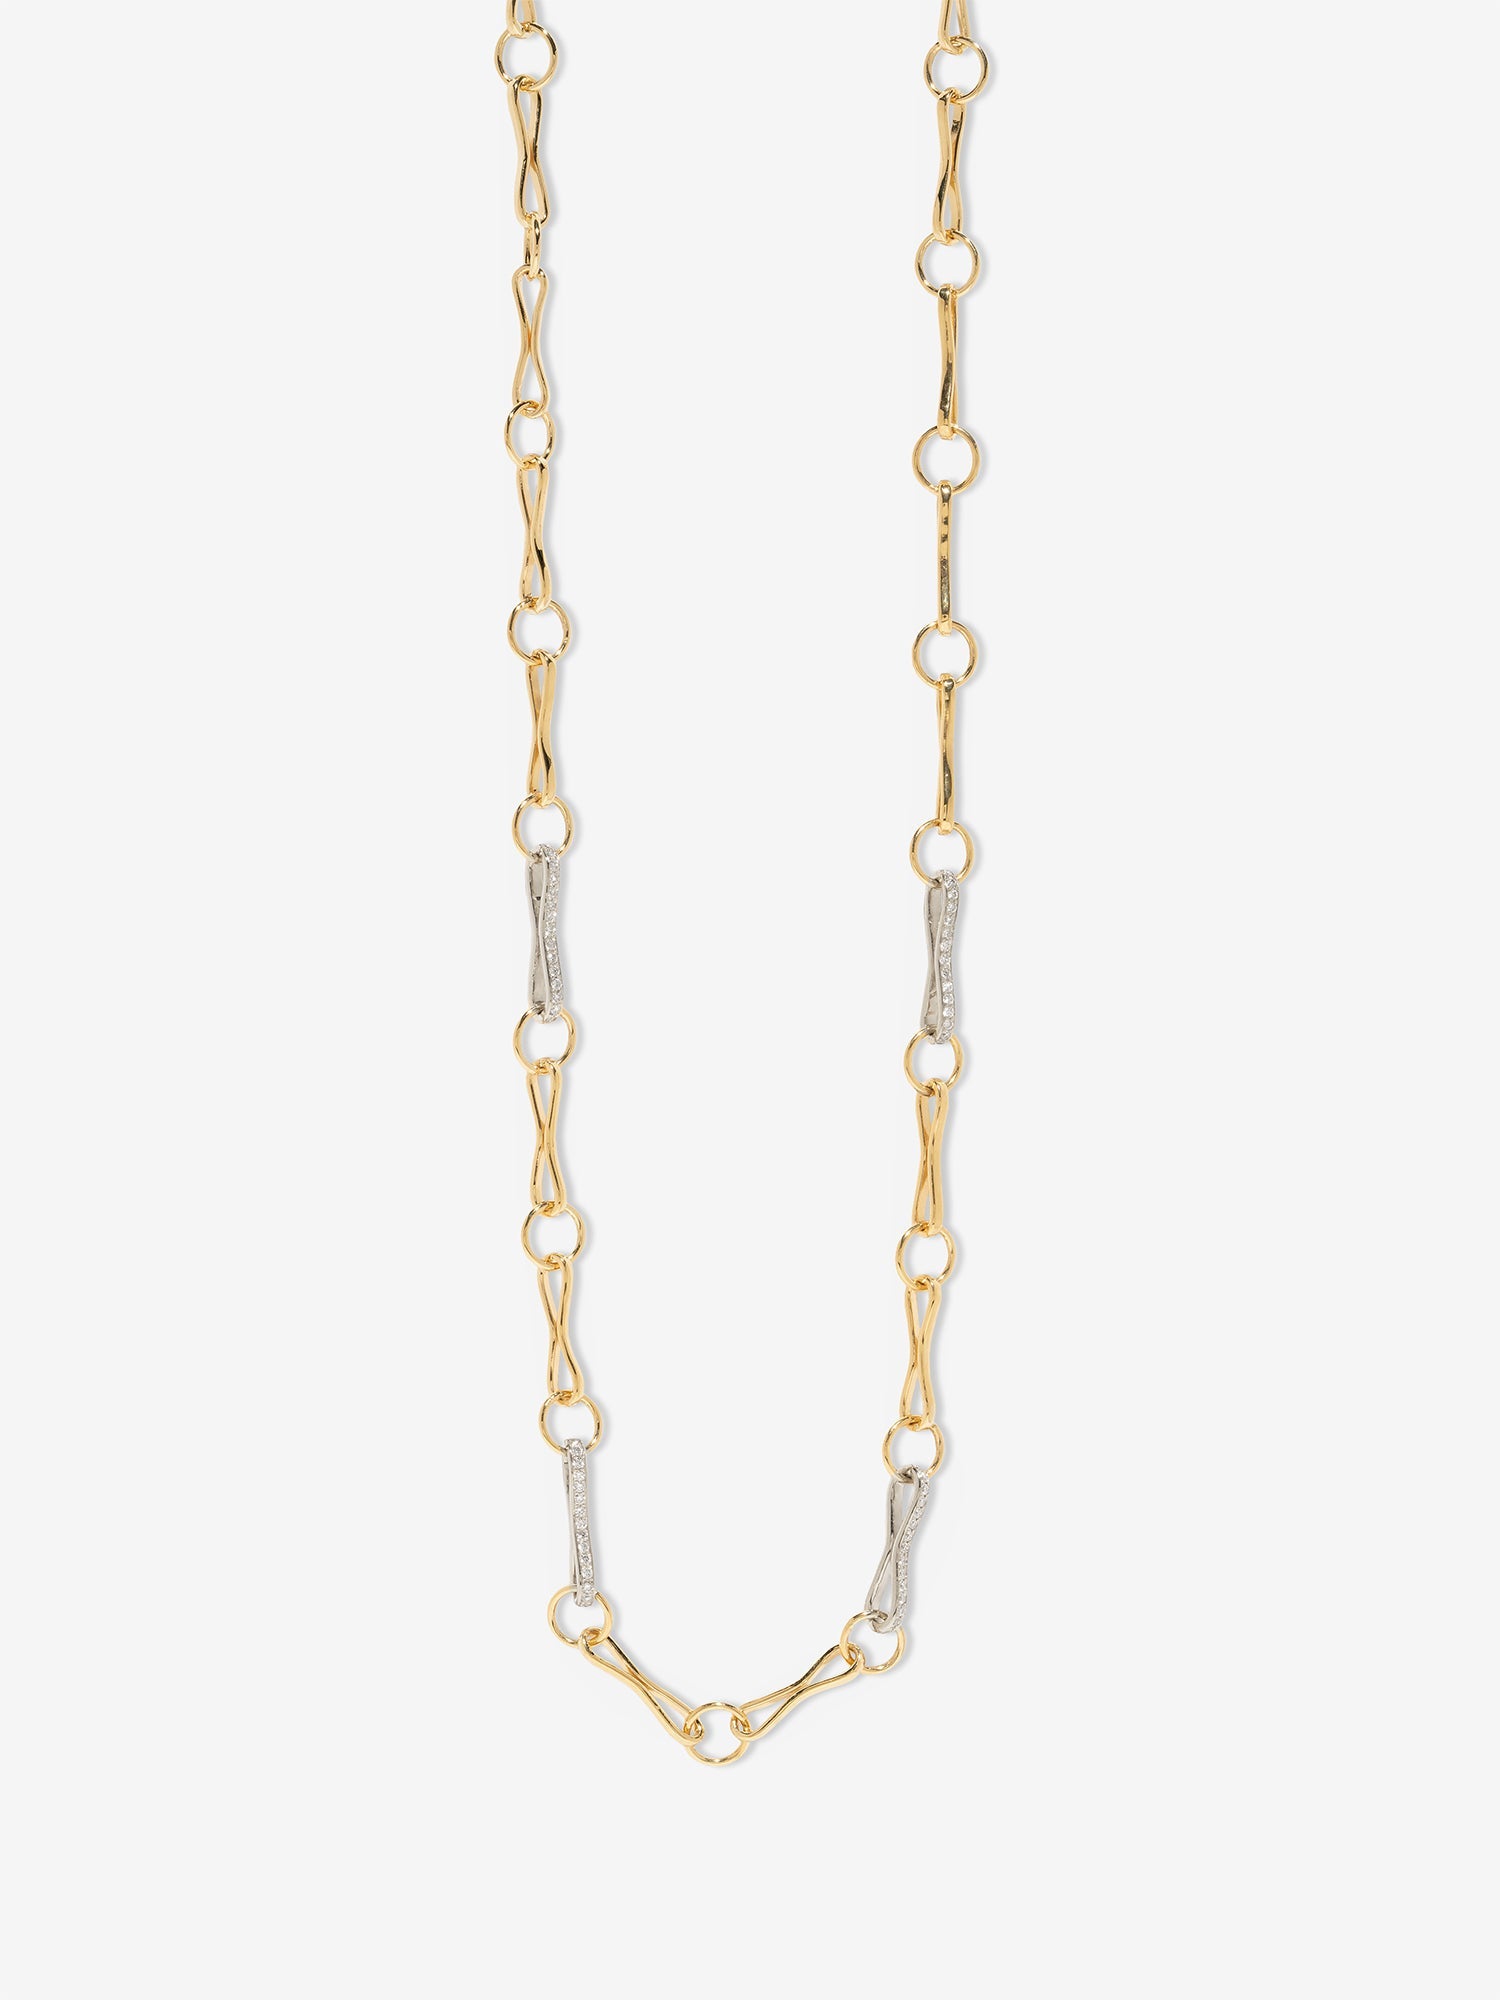 Large Circle-Link Handmade Chain with Diamond Links